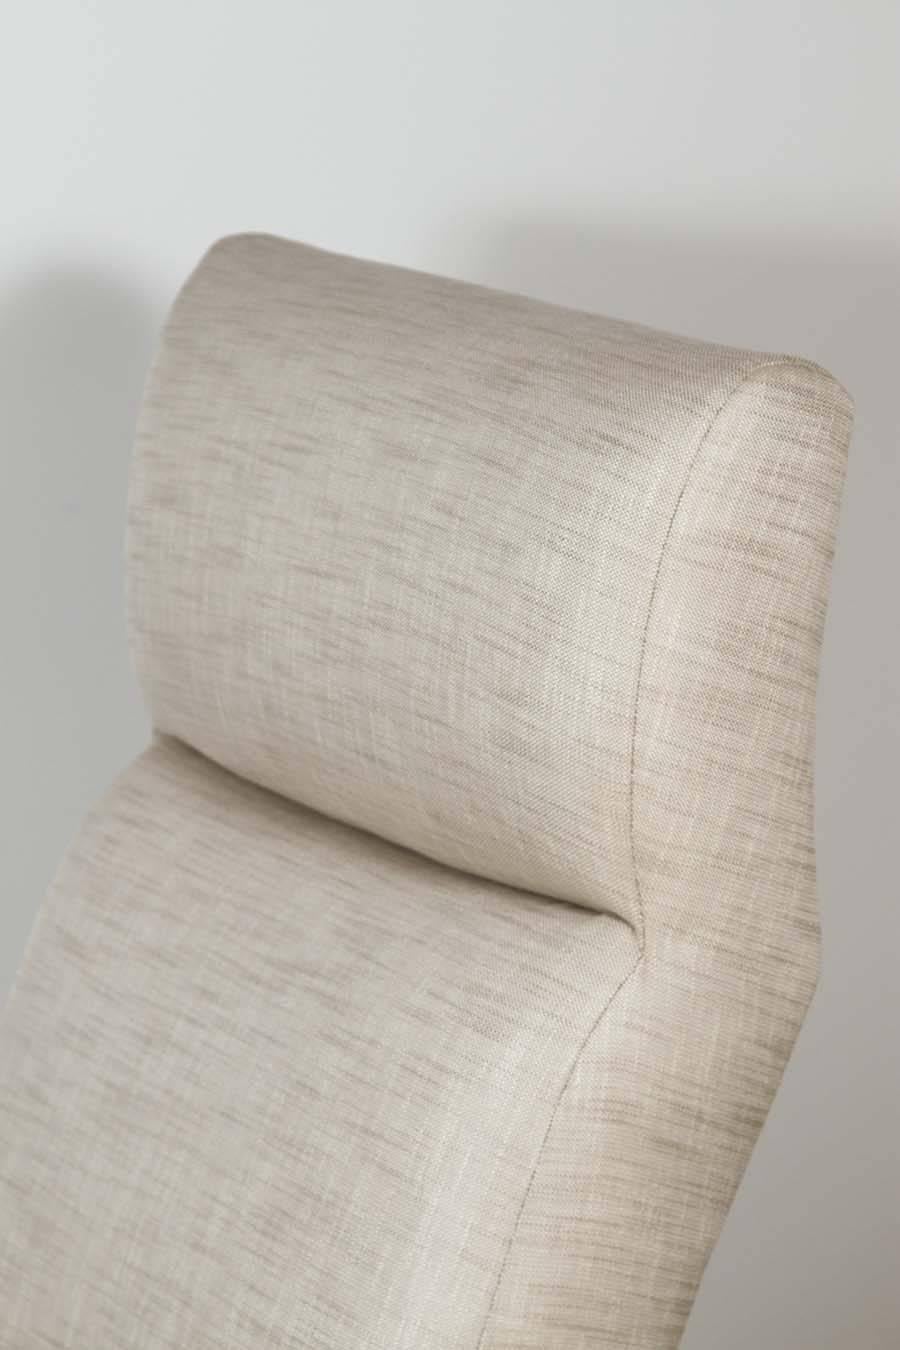 Modern Paul Marra Slipper Chair in Black Nickel with Linen